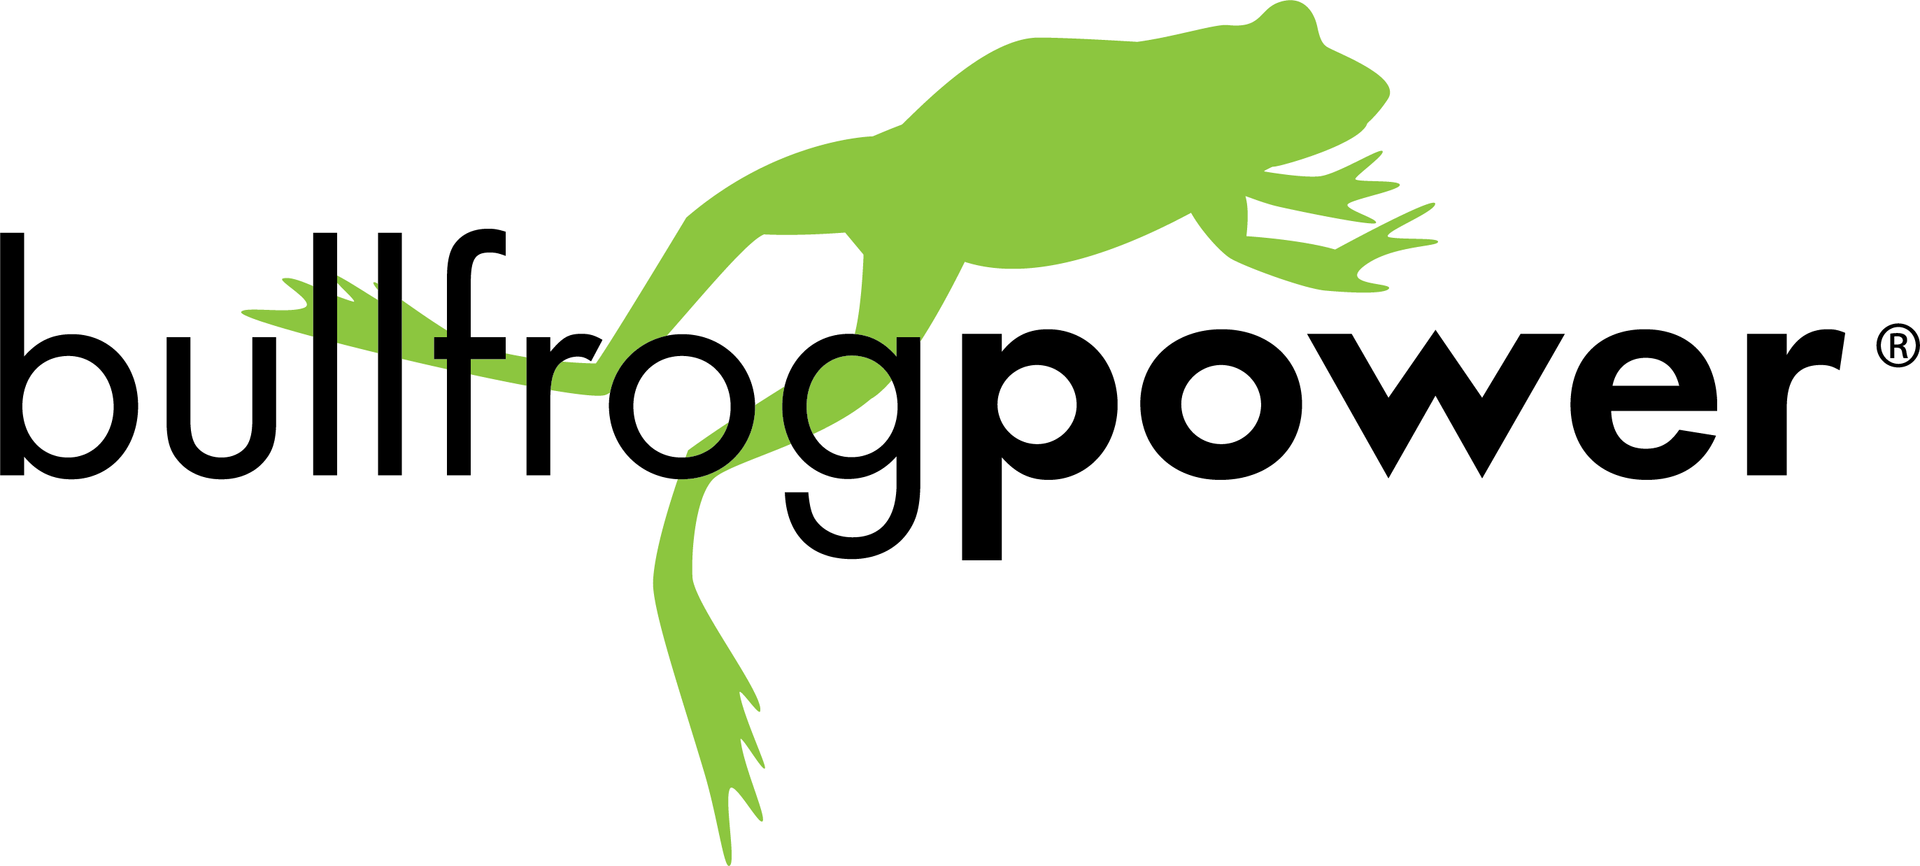 The bullfrogpower logo has a green frog on it.